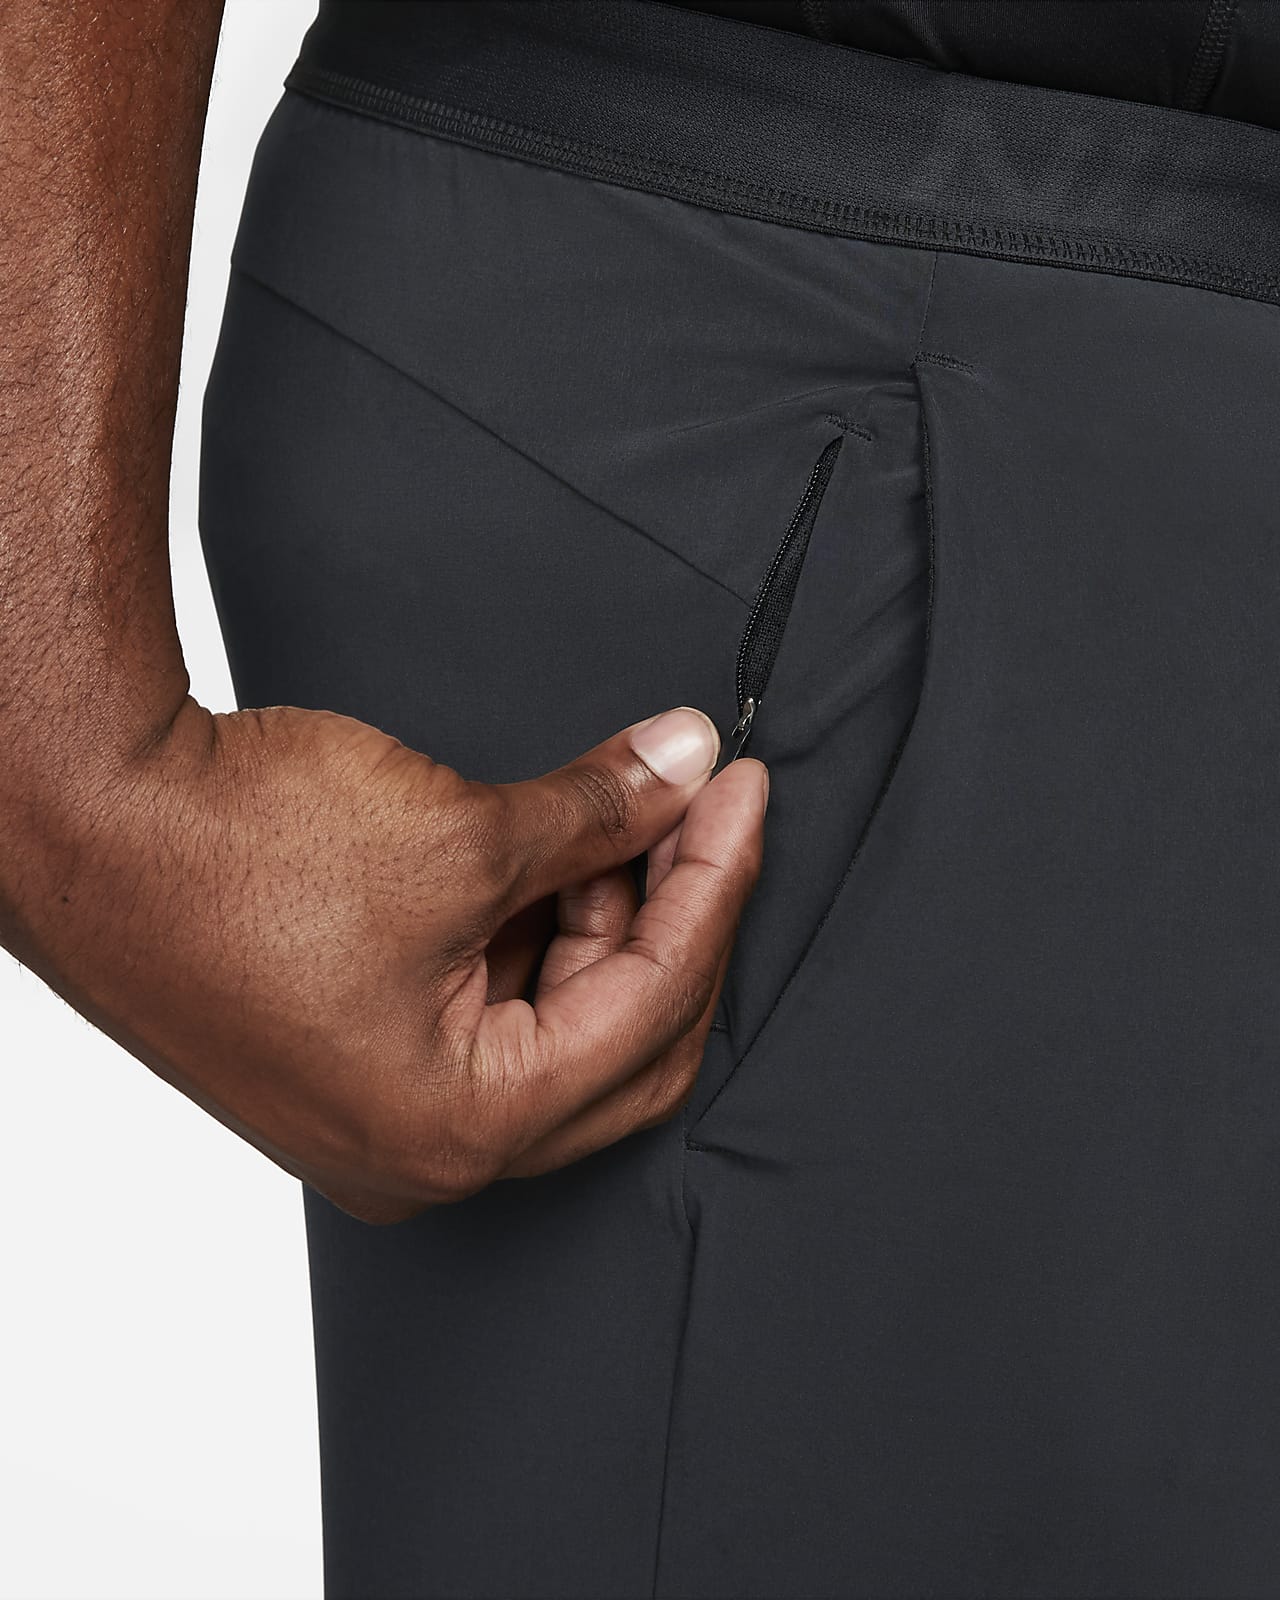 Nike Men's Dri-FIT Training Pants : : Clothing, Shoes & Accessories